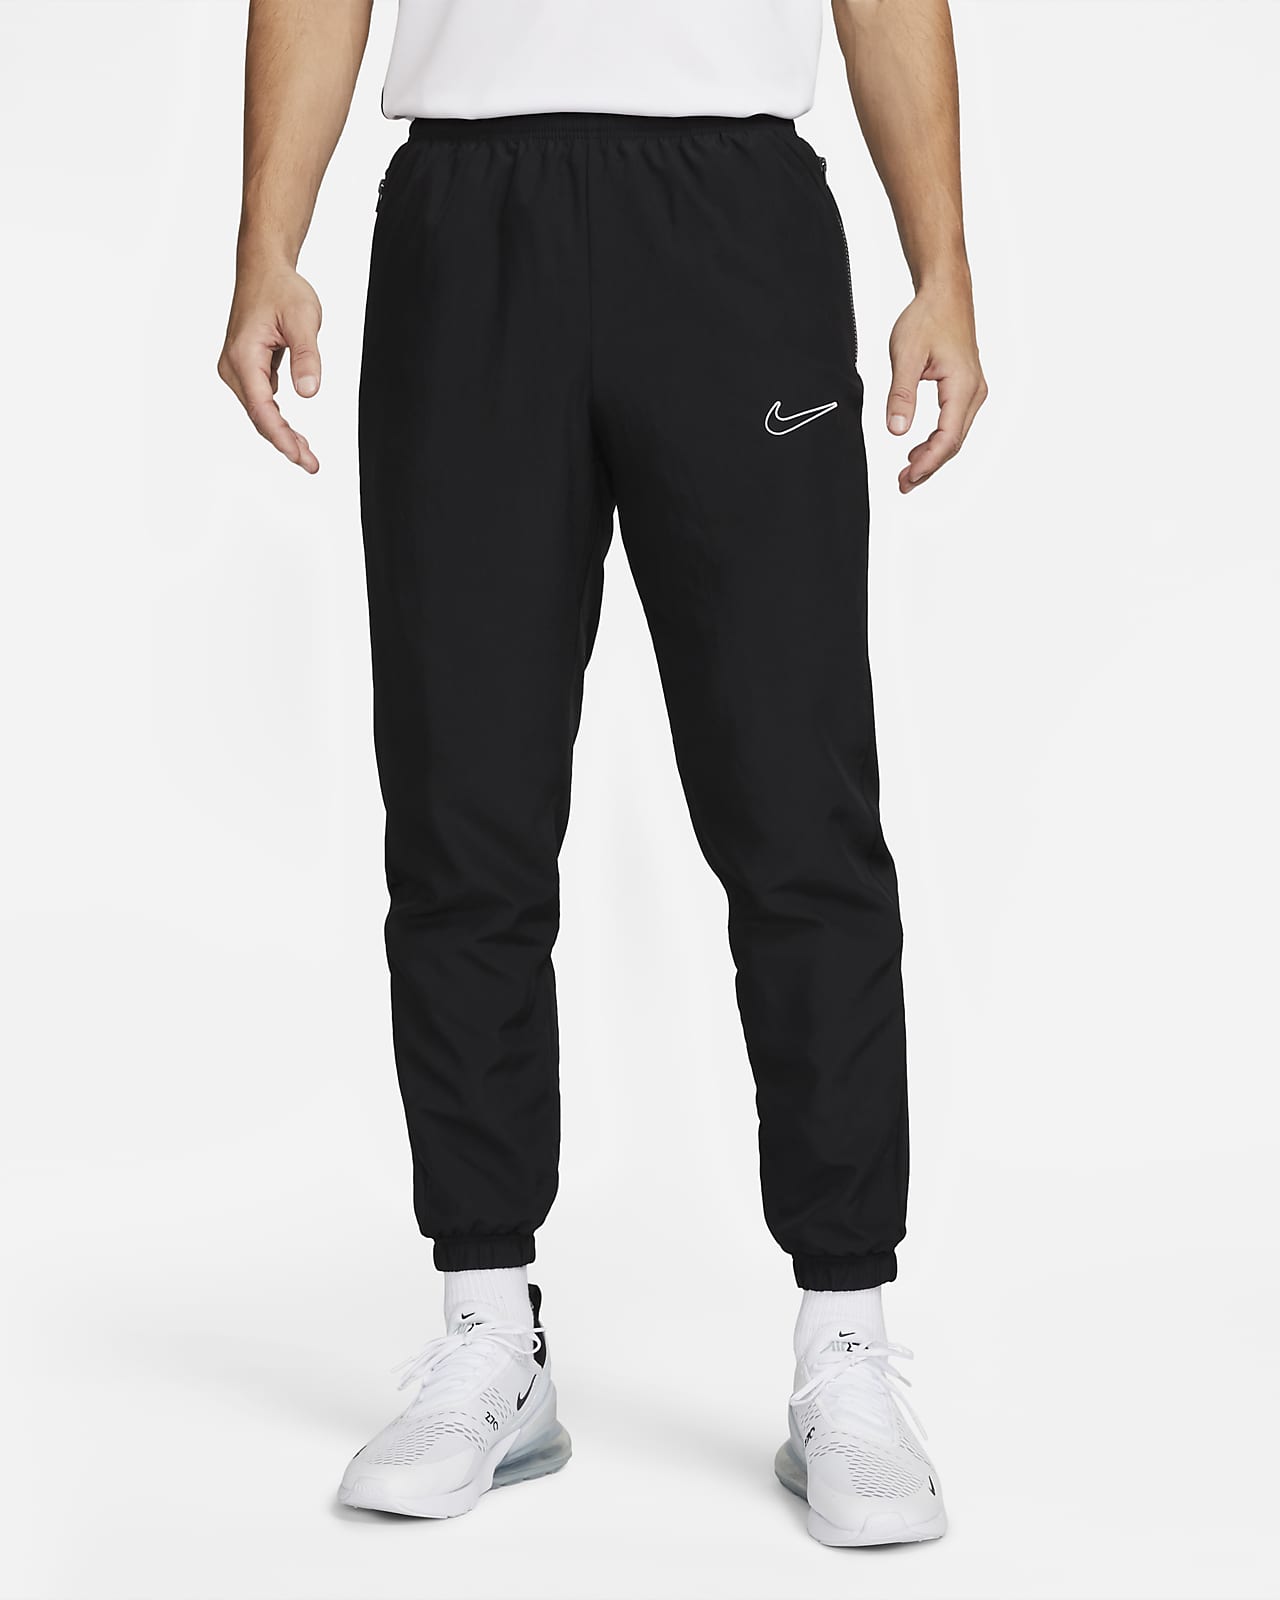 Nike deportivo tejido Woven de fútbol - Hombre. Nike ES